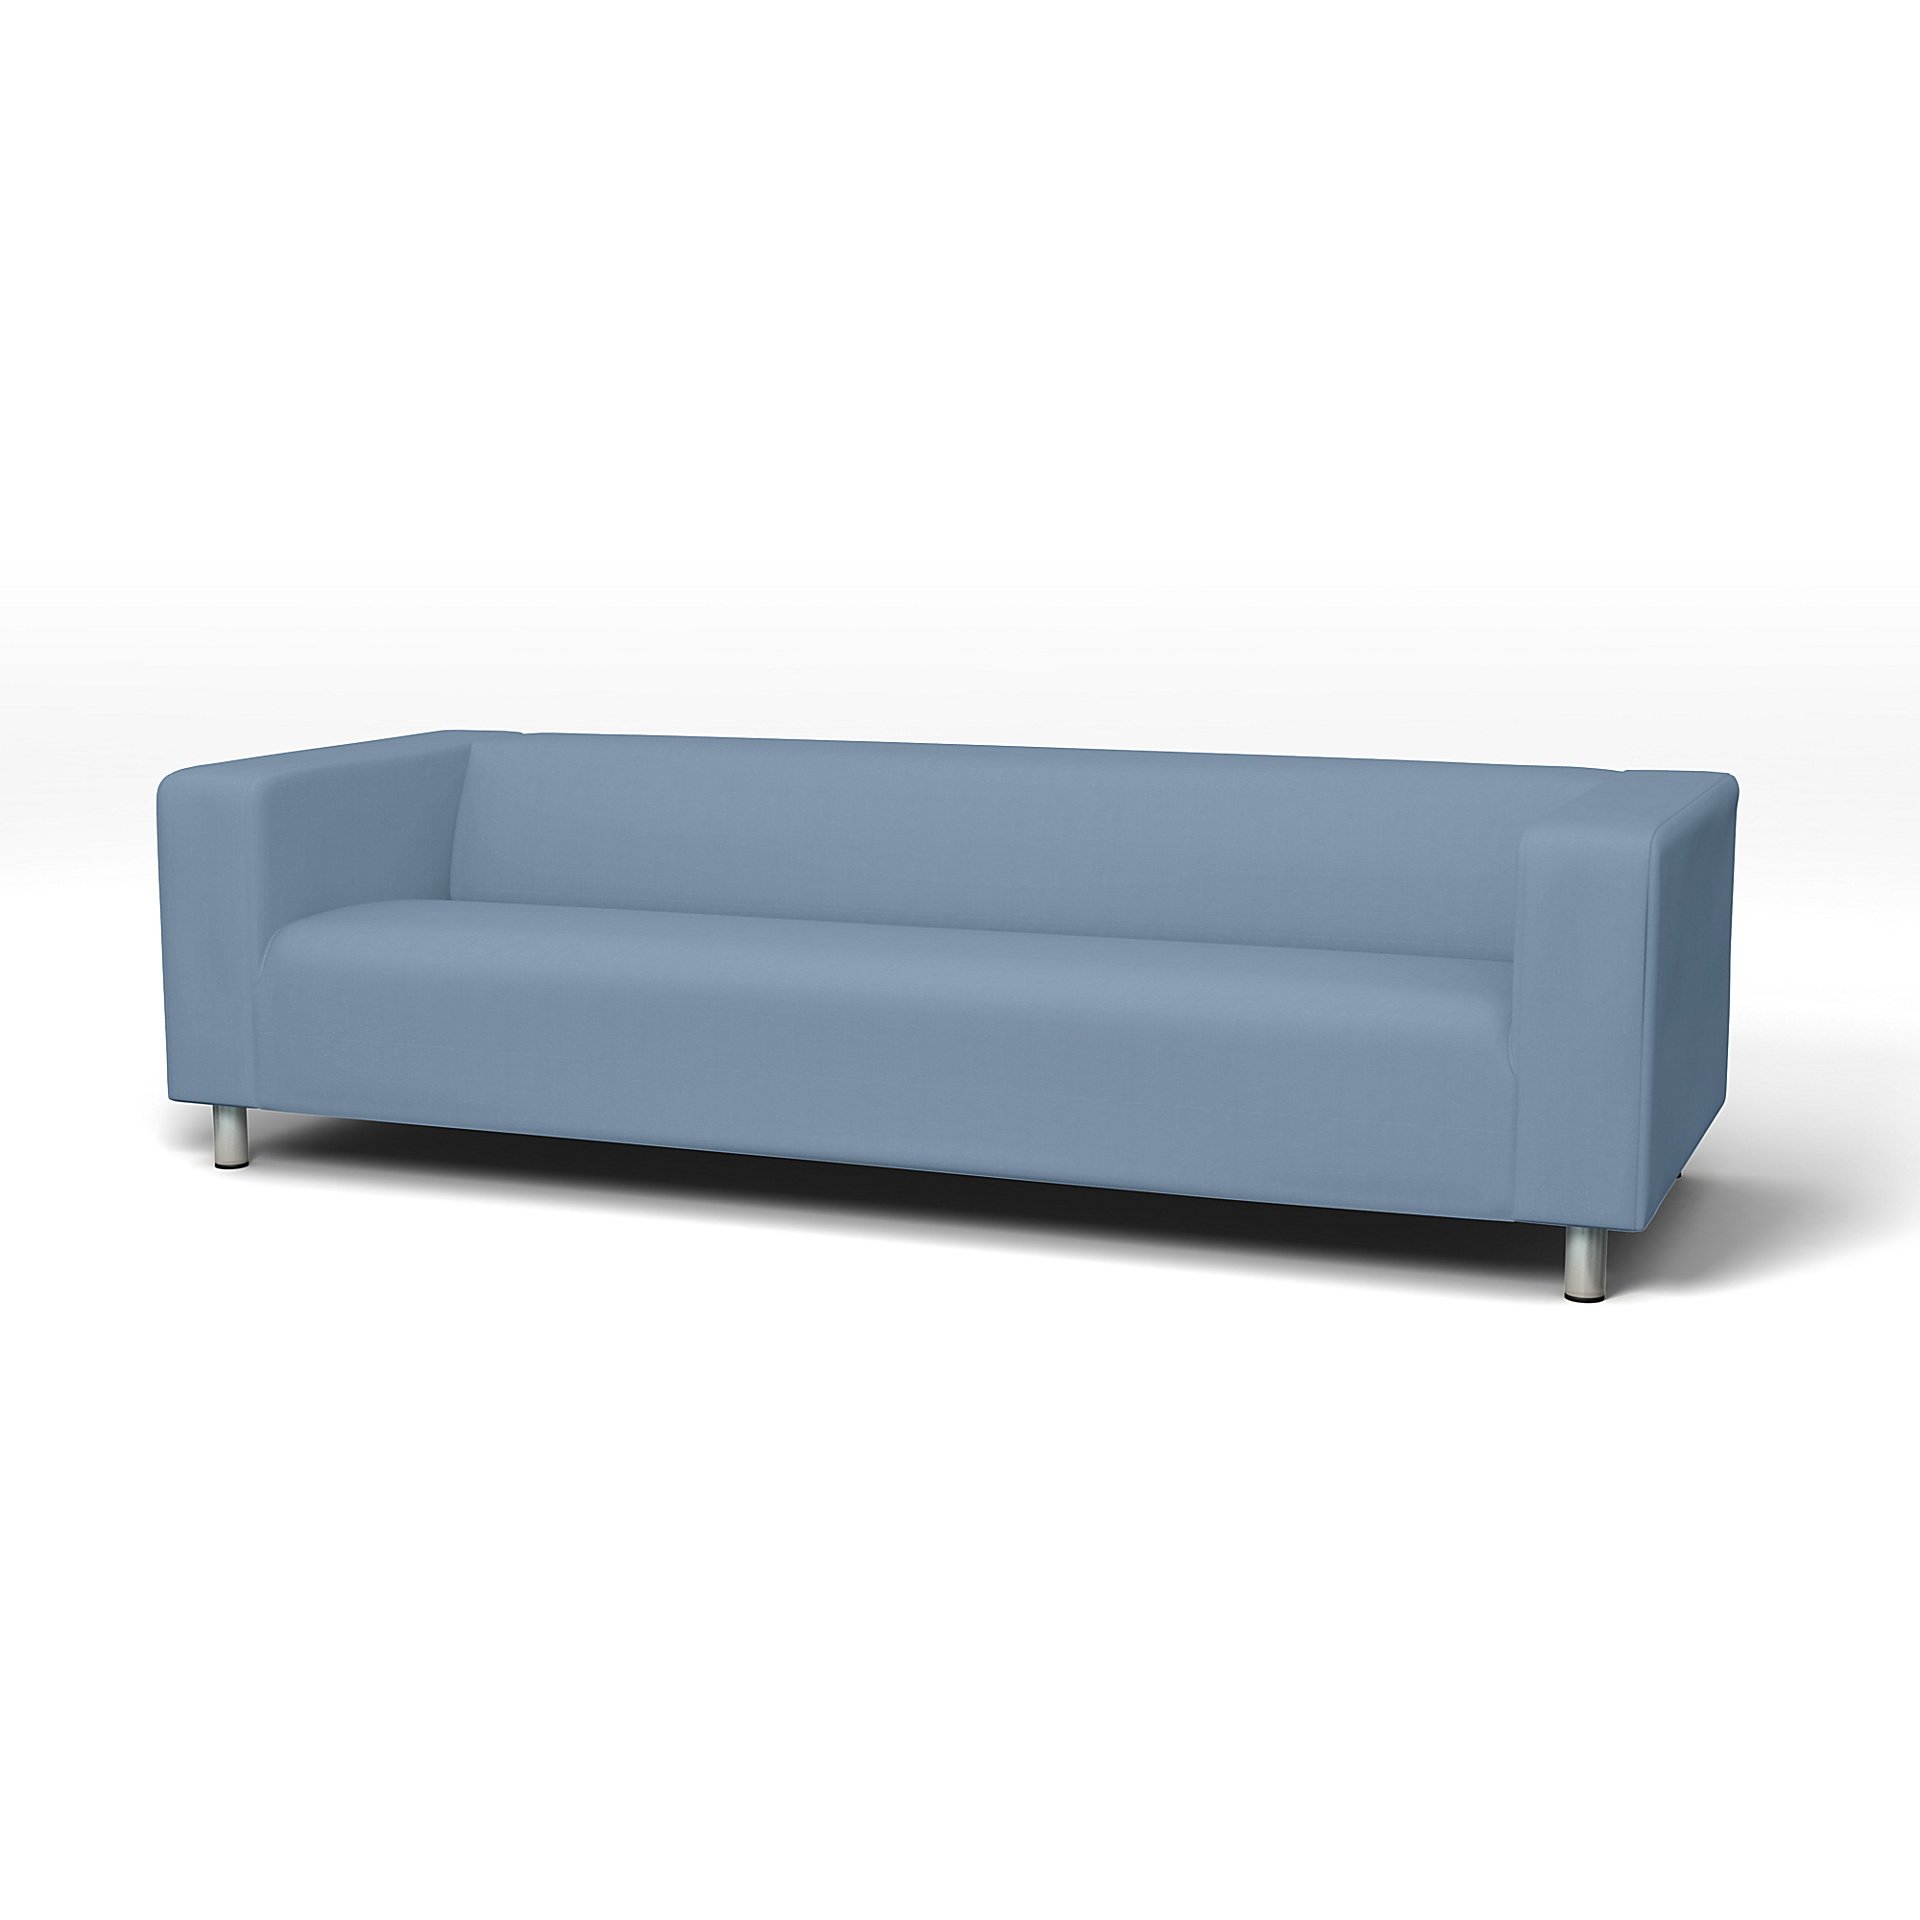 IKEA - Klippan 4 Seater Sofa Cover, Dusty Blue, Cotton - Bemz